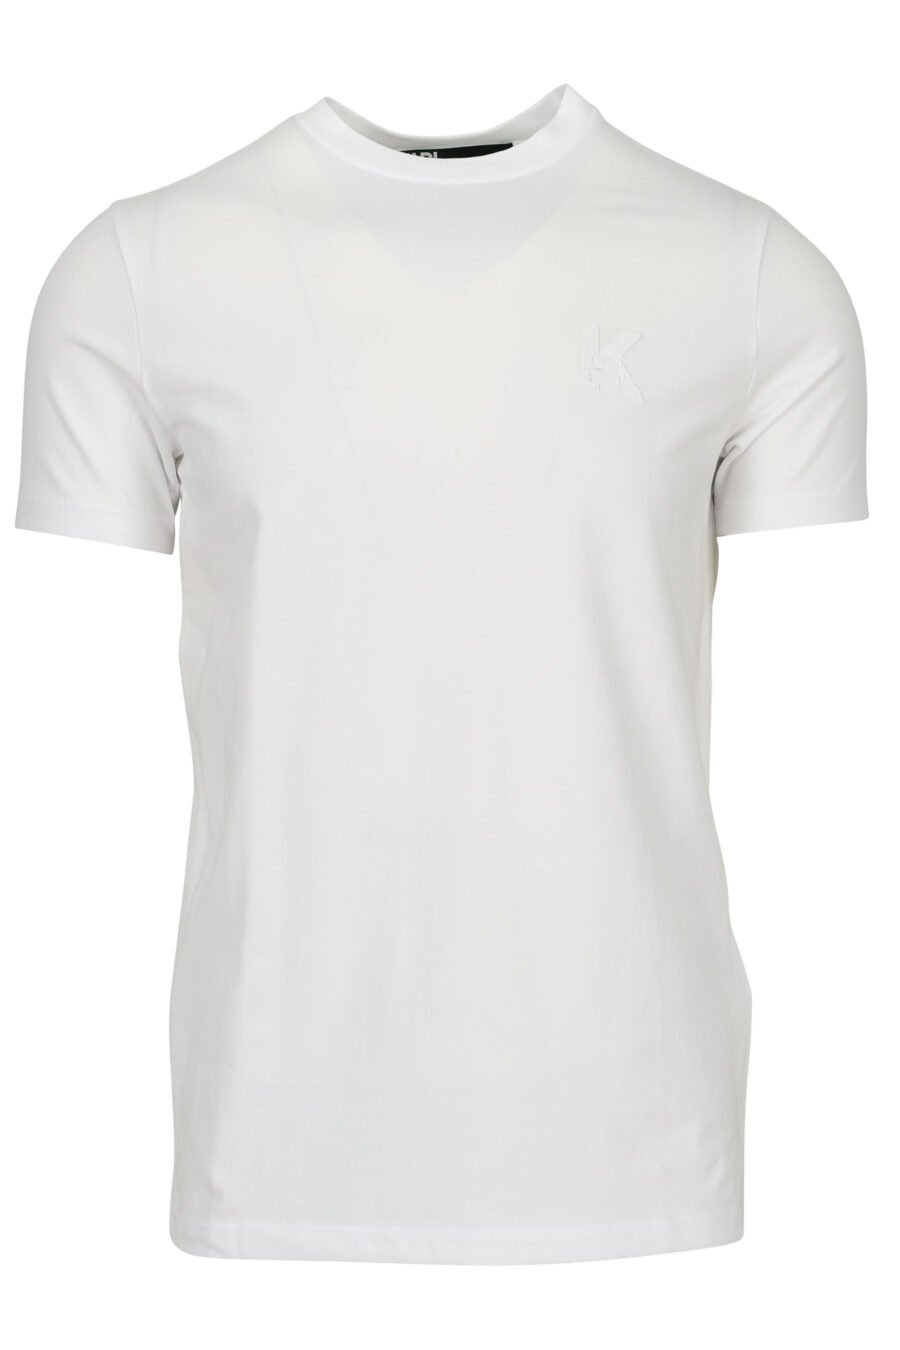 Camiseta blanca con minilogo blanco K - 4062225534179